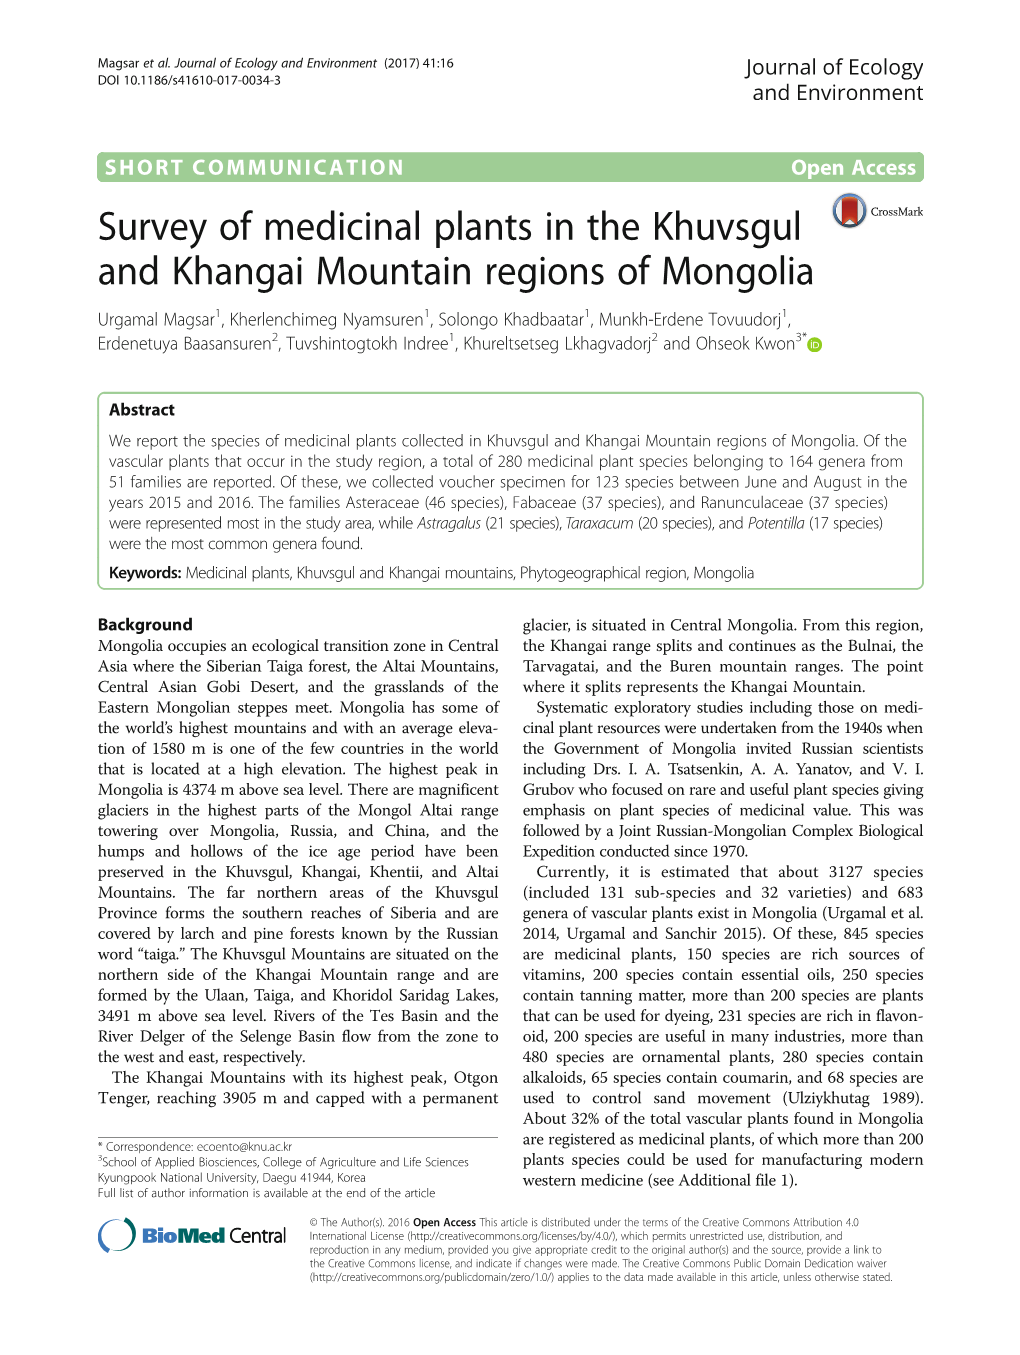 Survey of Medicinal Plants in the Khuvsgul and Khangai Mountain